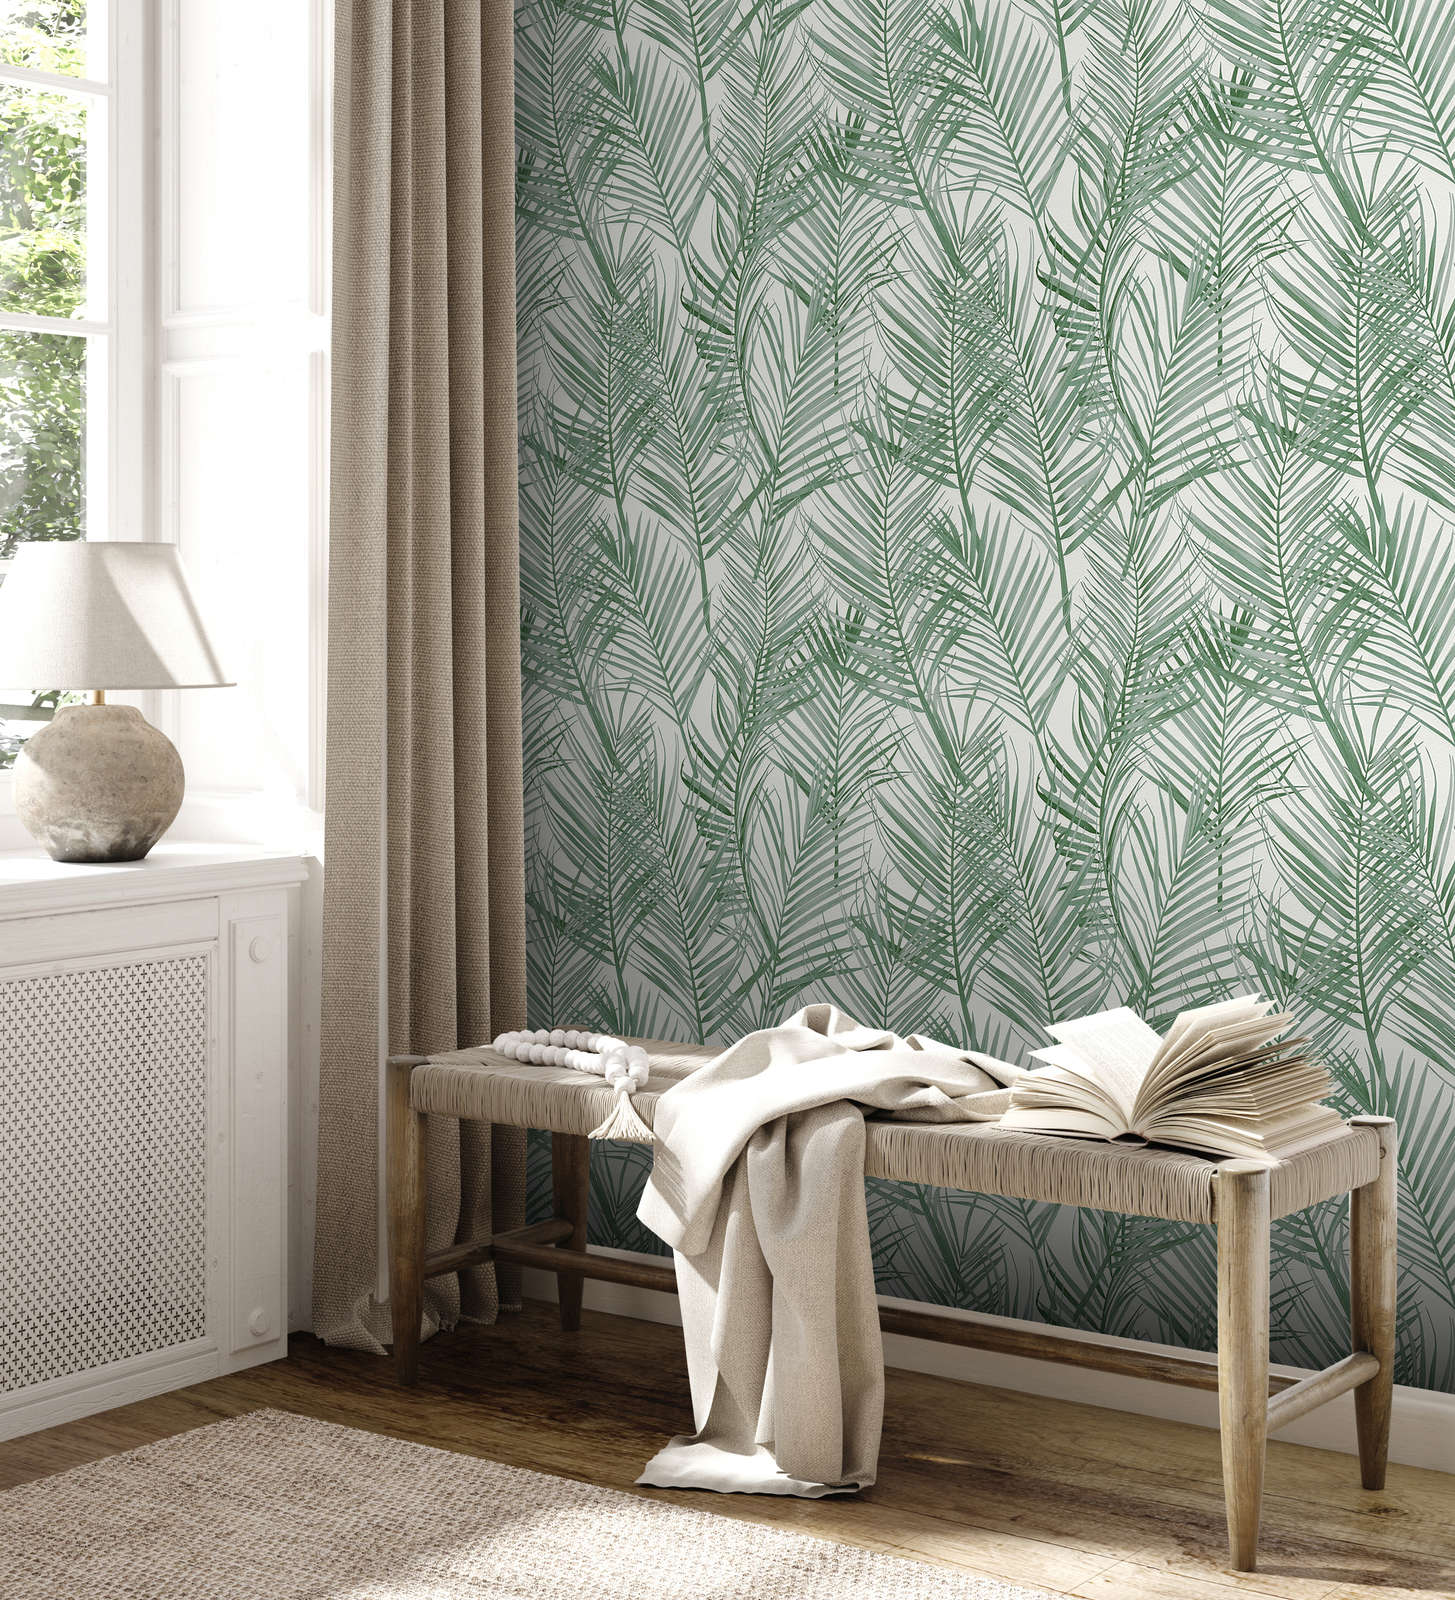             Vliestapete mit großflächigem Palmen Muster – Grün, Weiß
        